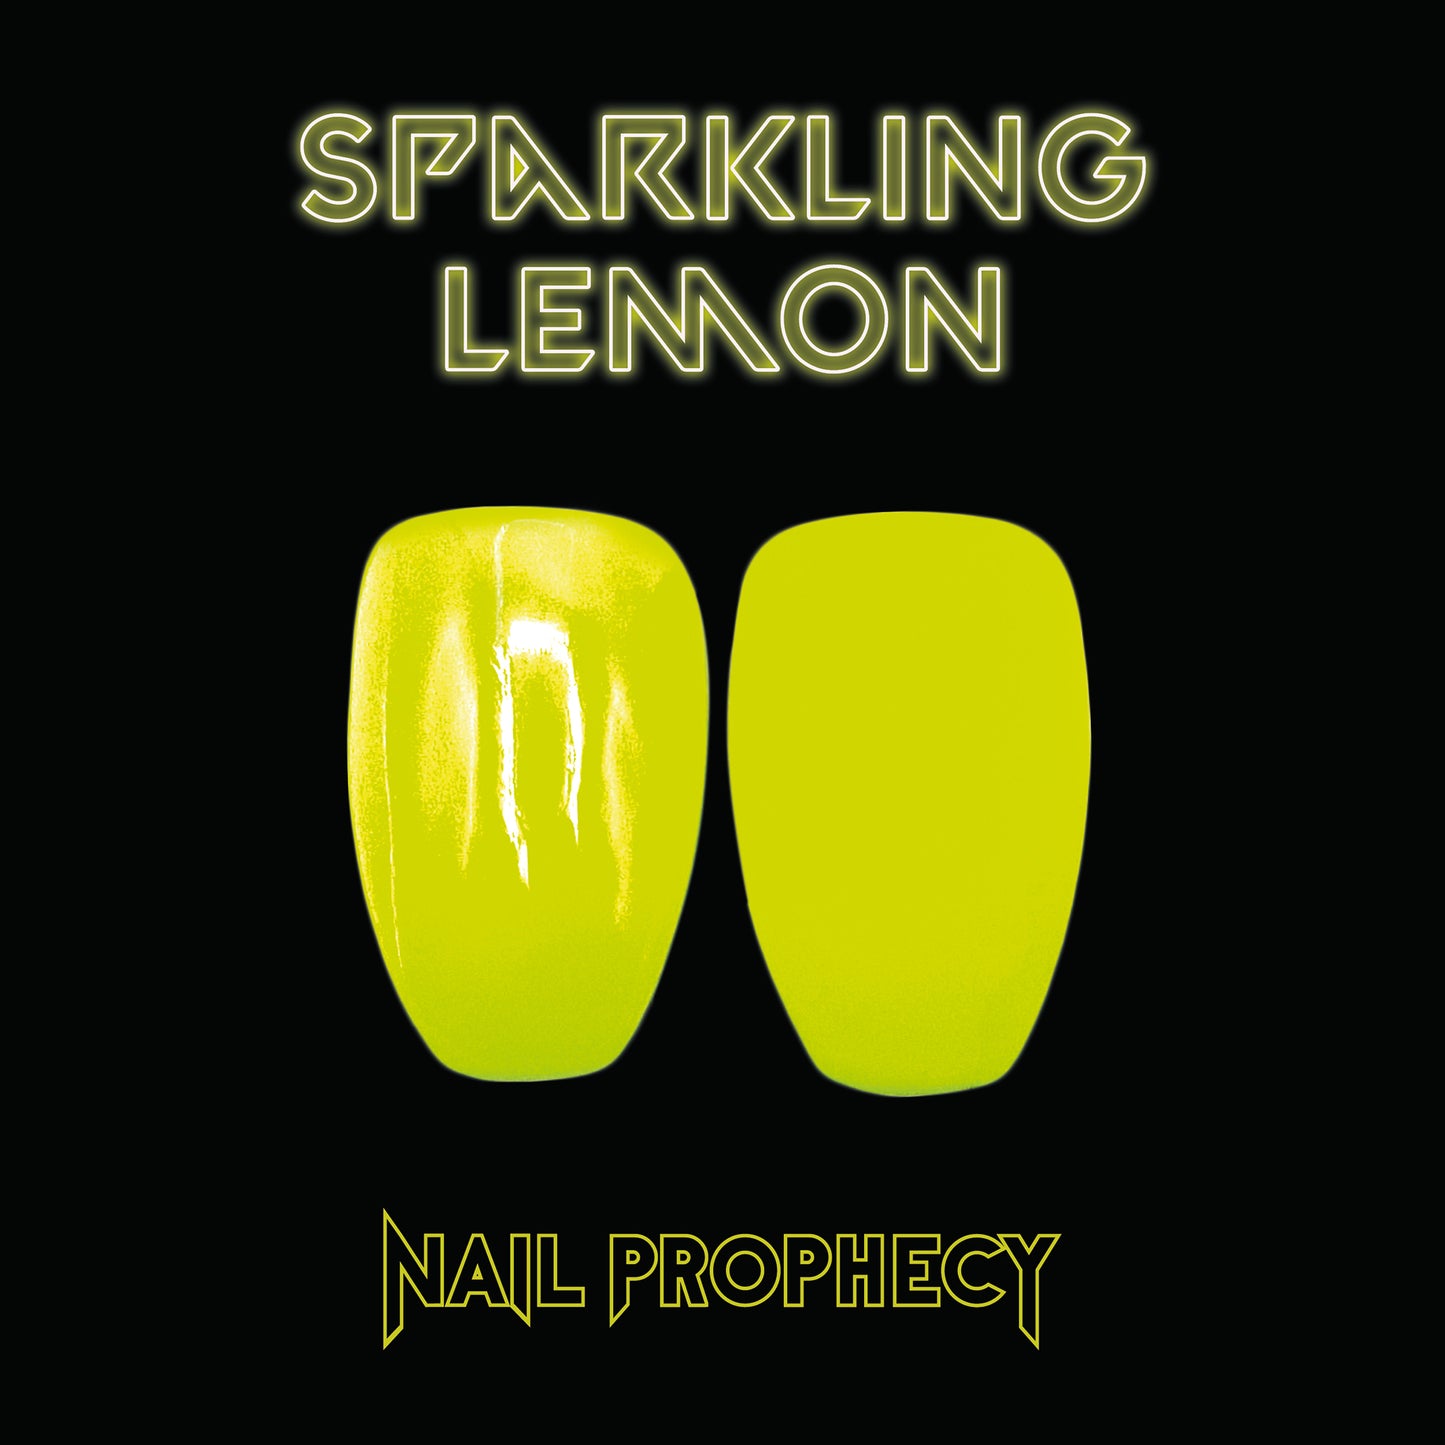 Neon Collection: Sparkling lemon